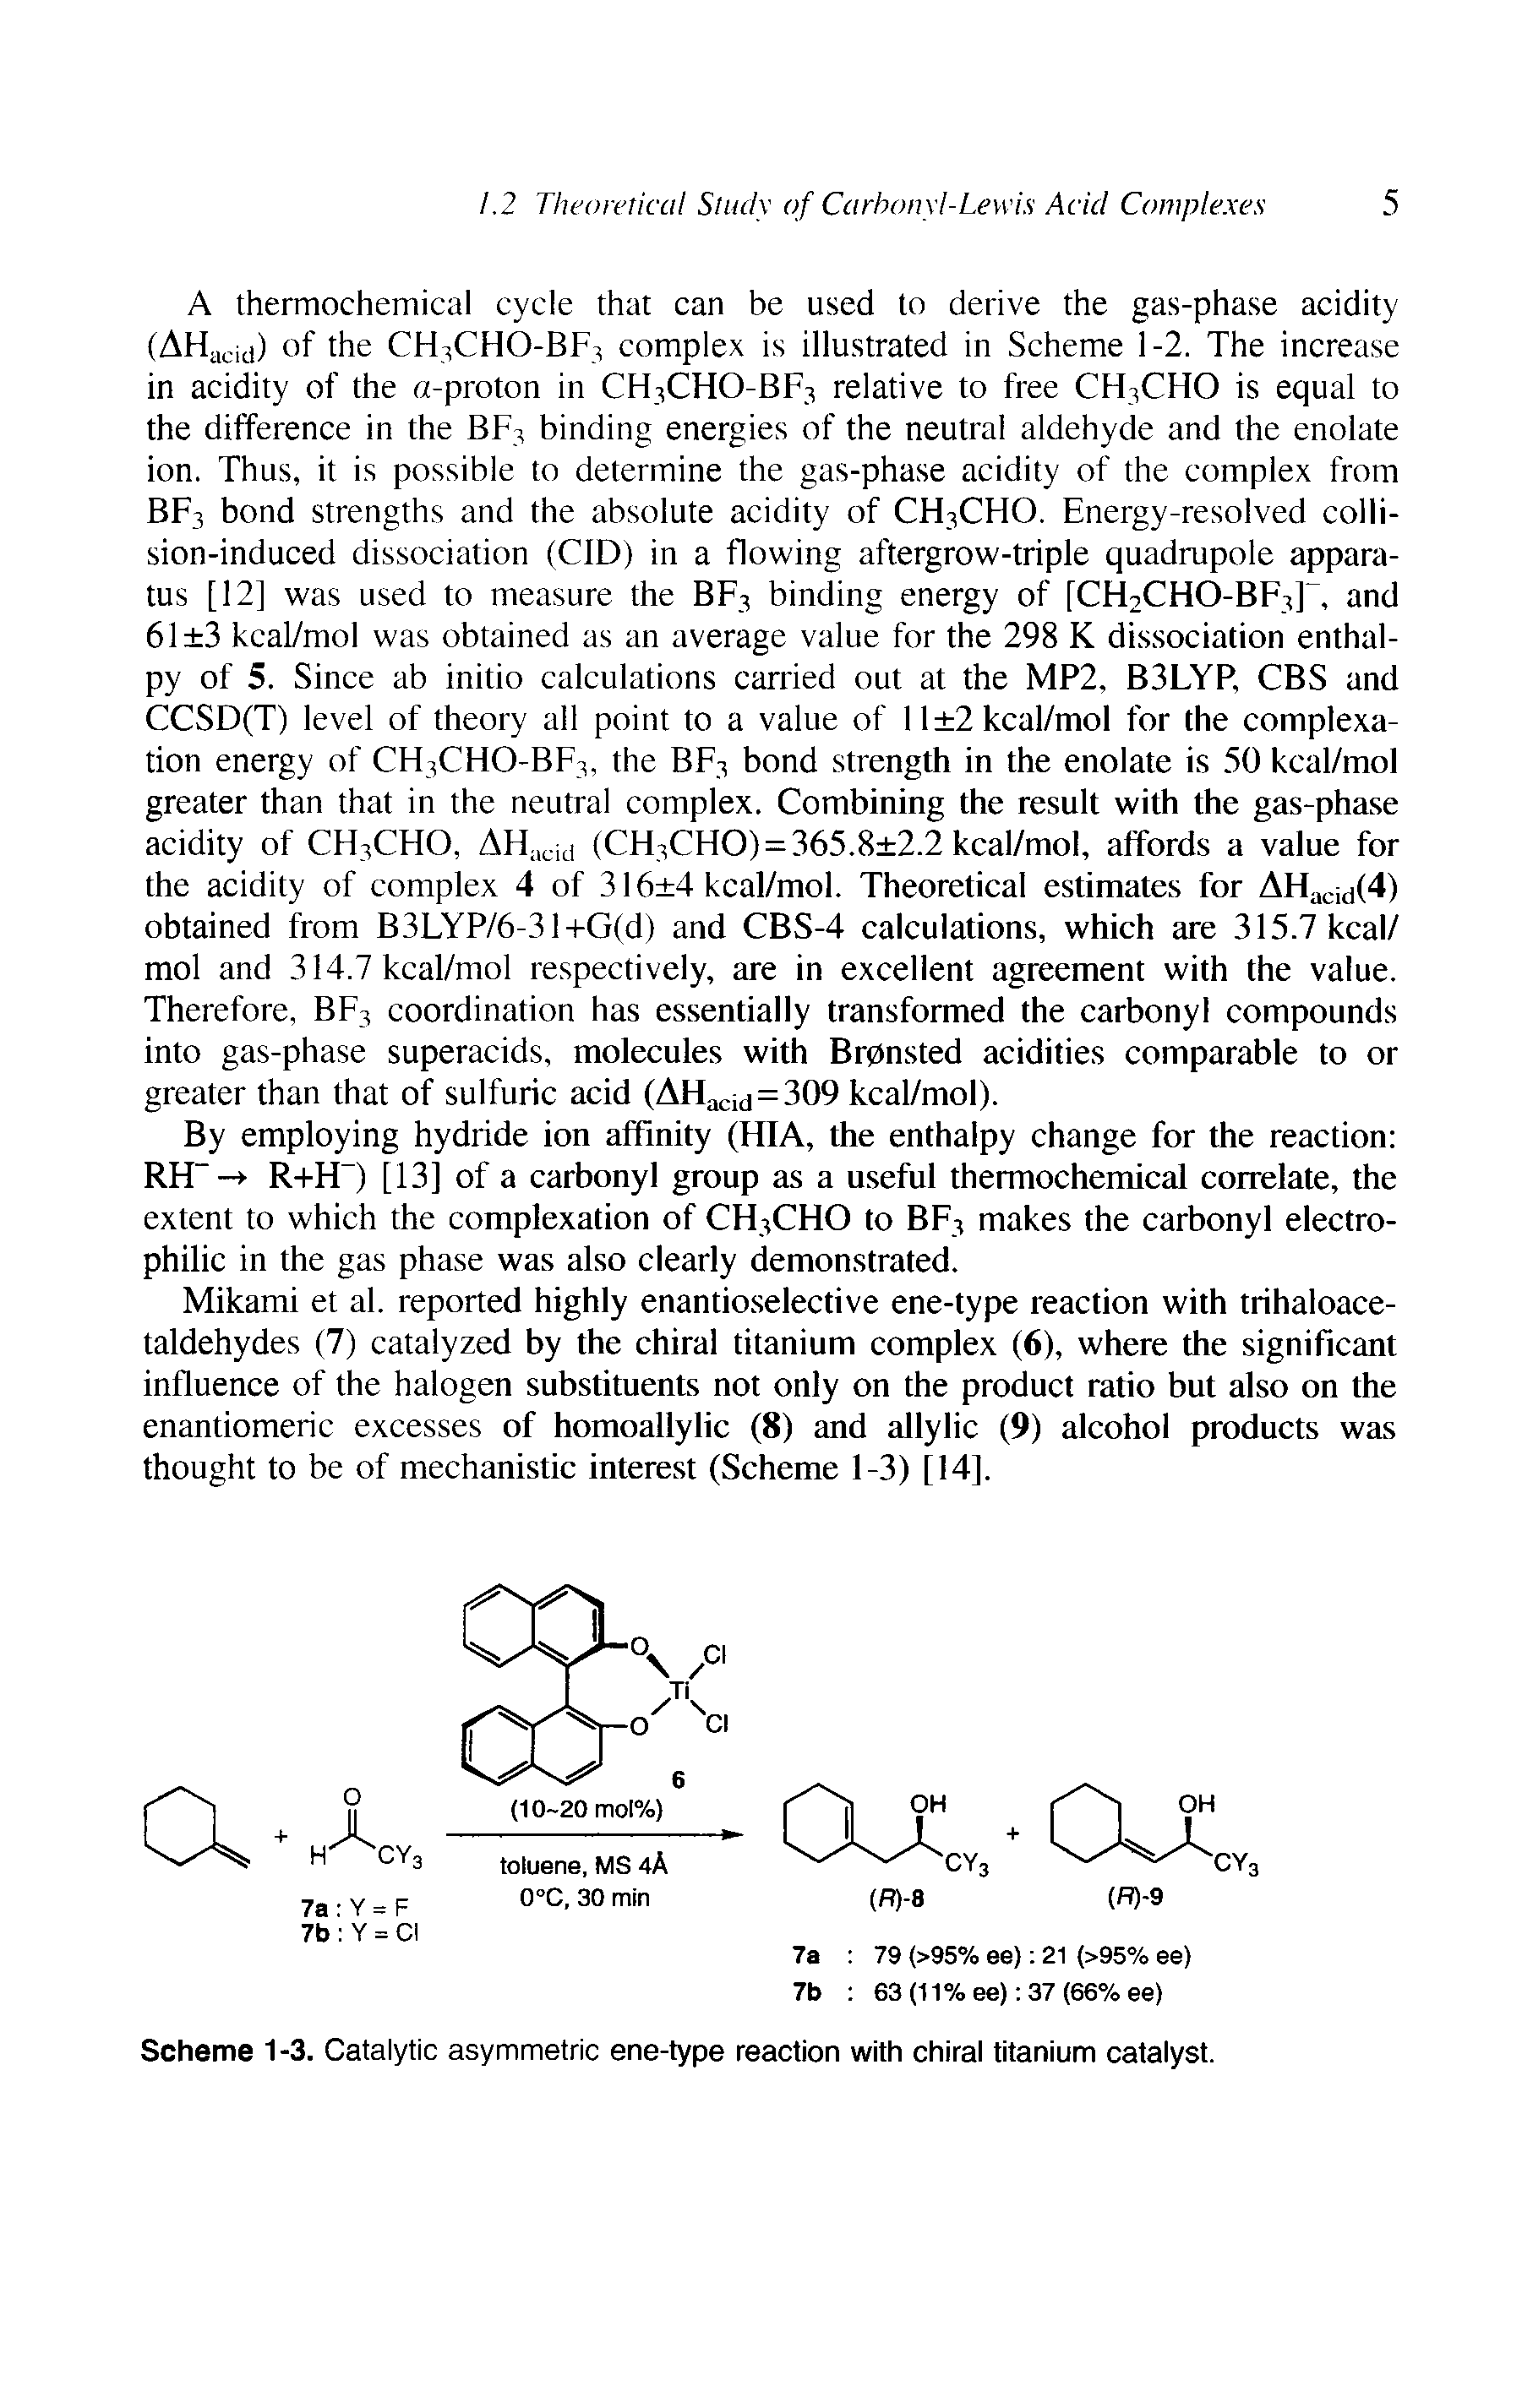 Scheme 1-3. Catalytic asymmetric ene-type reaction with chiral titanium catalyst.